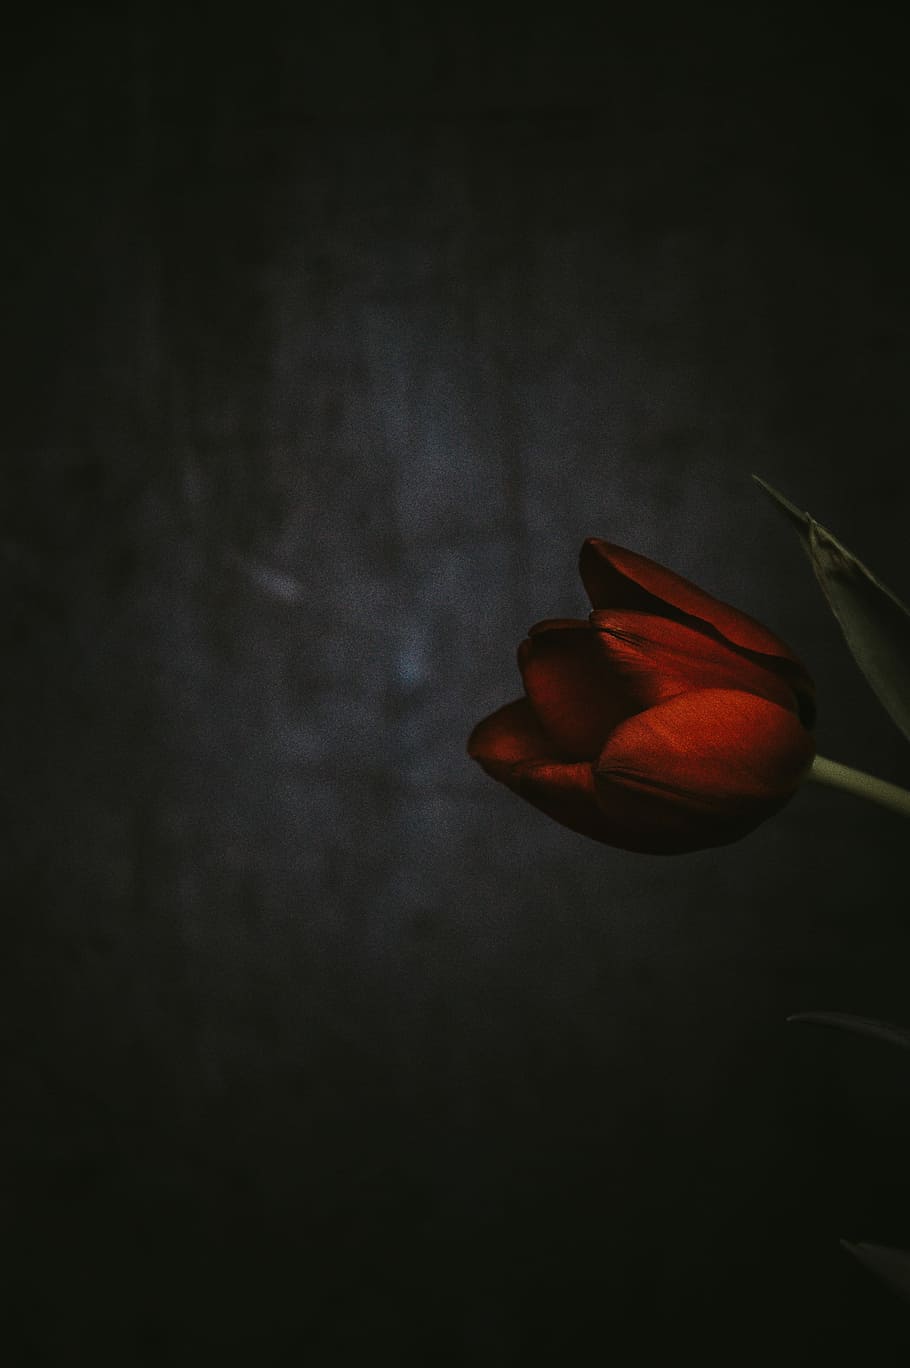 Hd Wallpaper Tulips On Dark Background Red Rose Flower Single Stem Black Background Wallpaper Flare